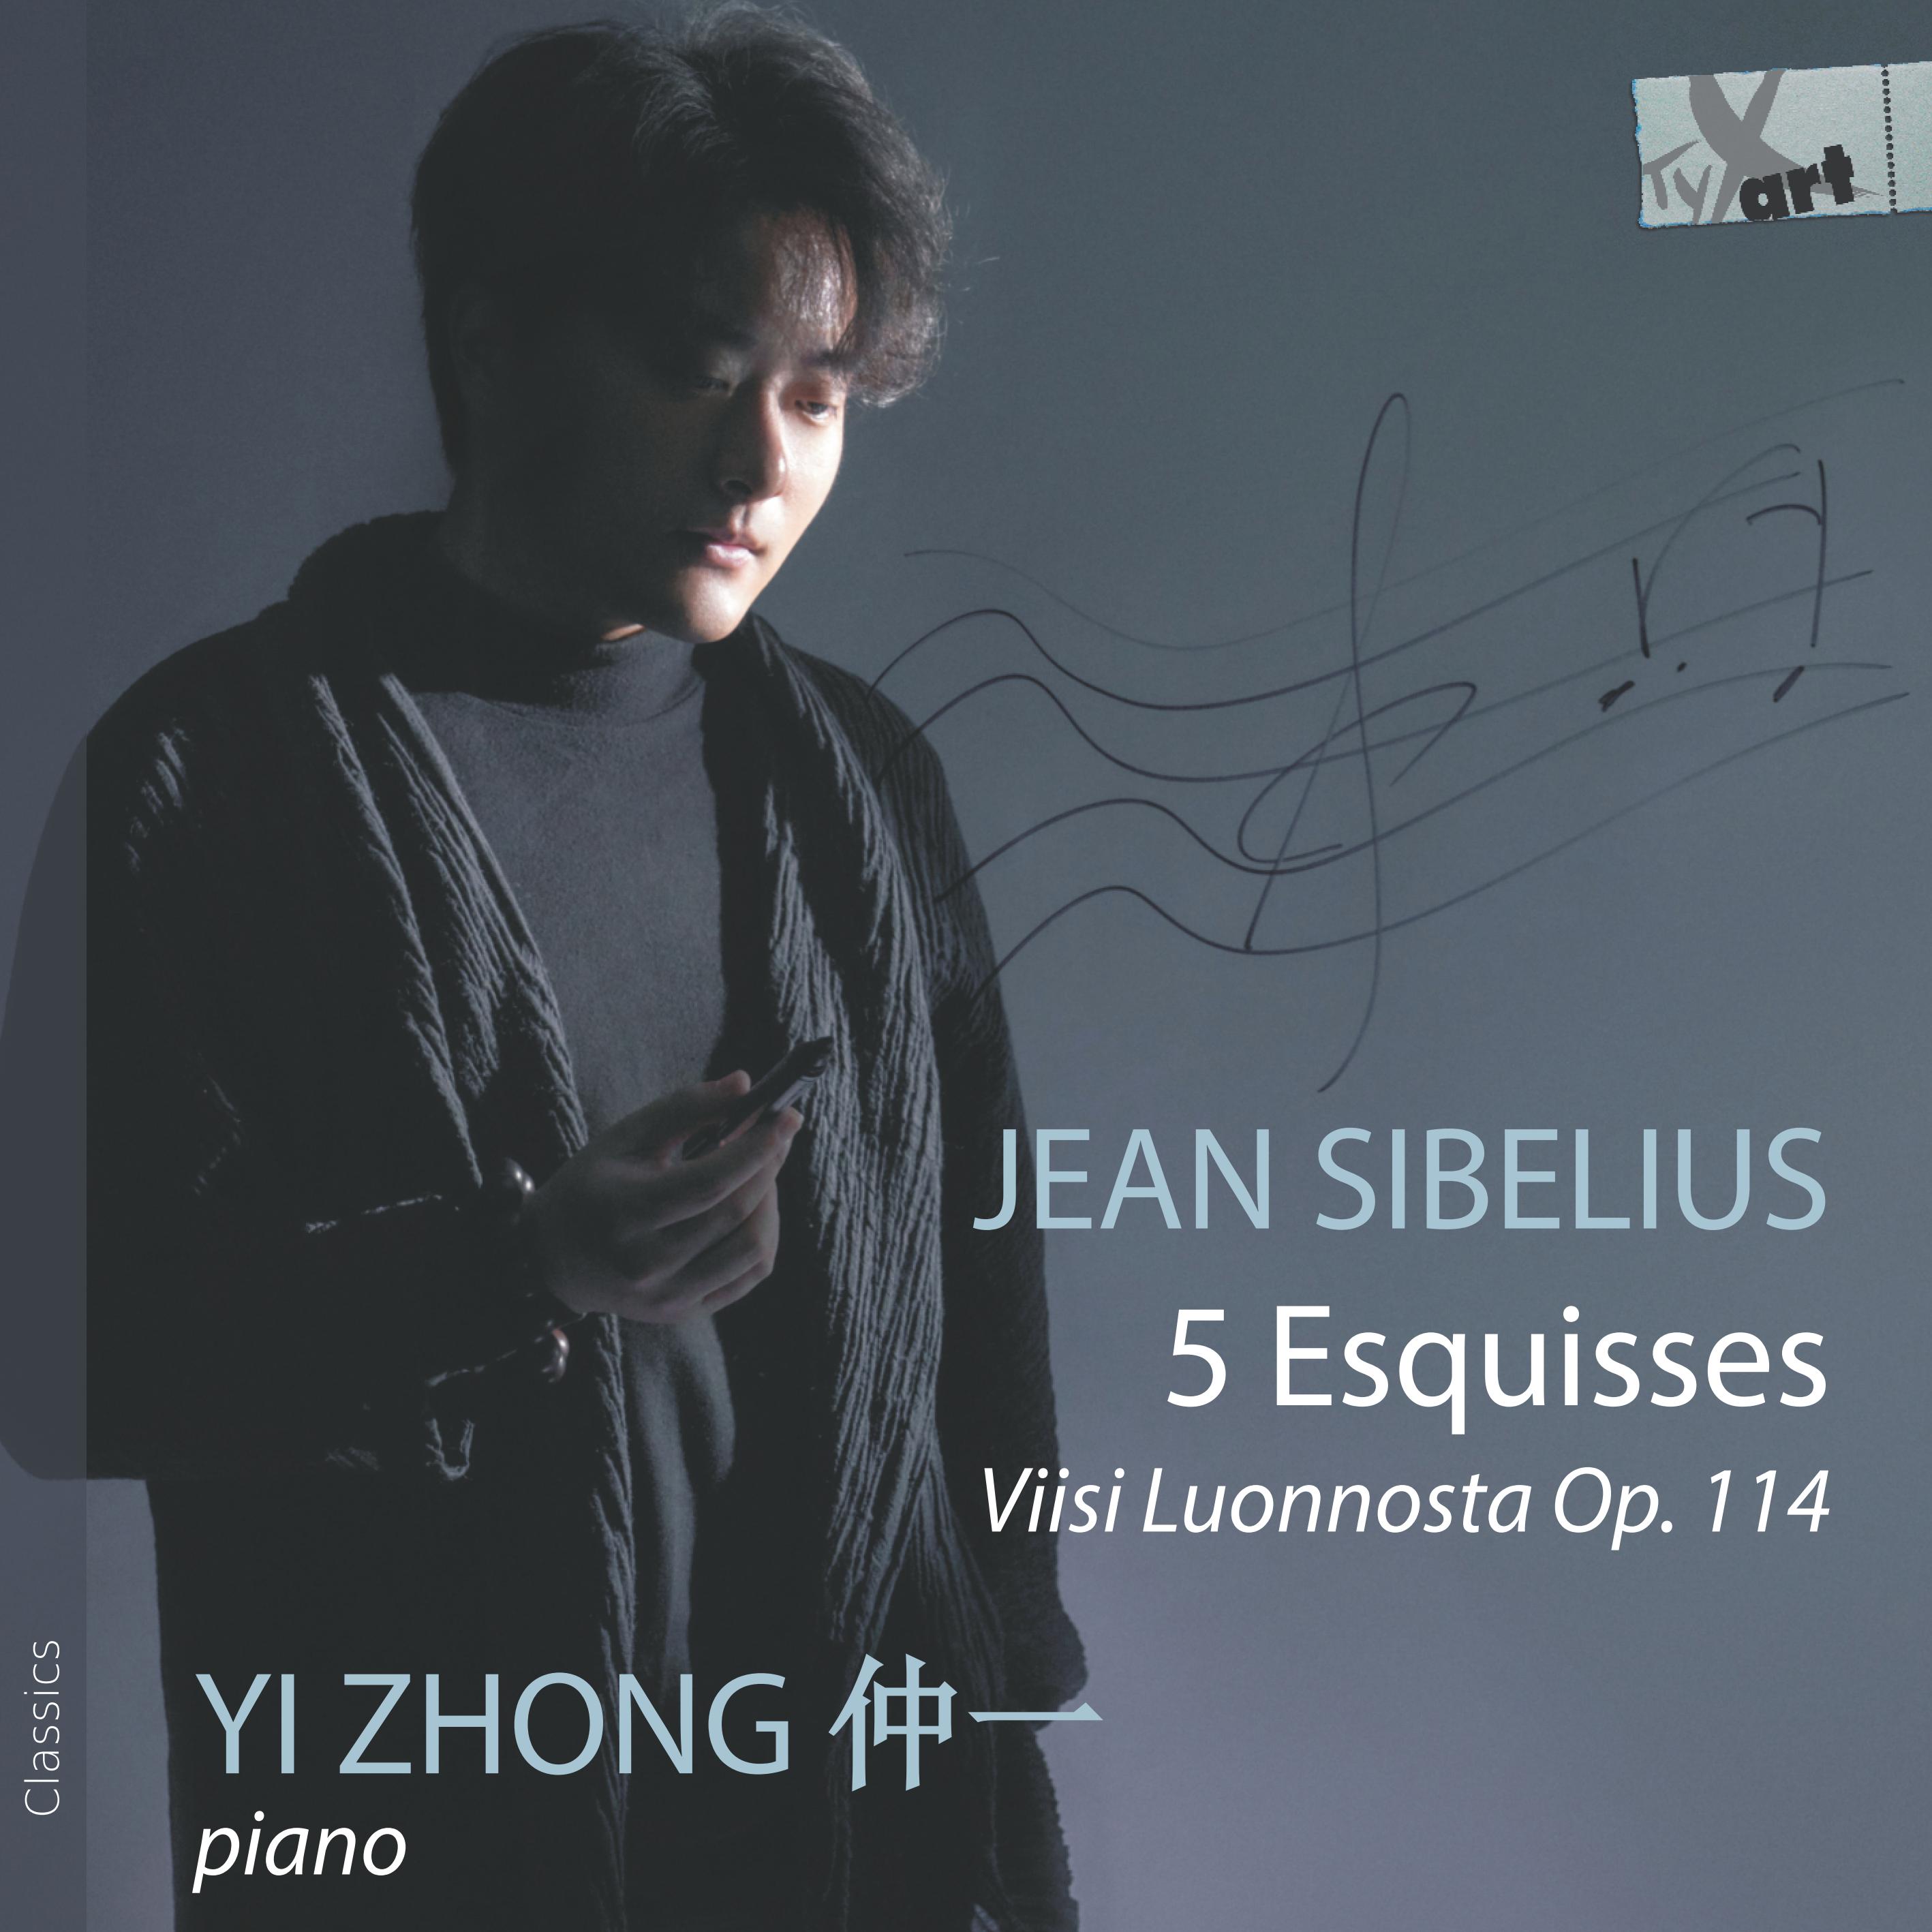 Sibelius: 5 Esquisses, Op. 114 - 5 Skizzen - Viisi Luonnosta - Yi Zhong, Piano